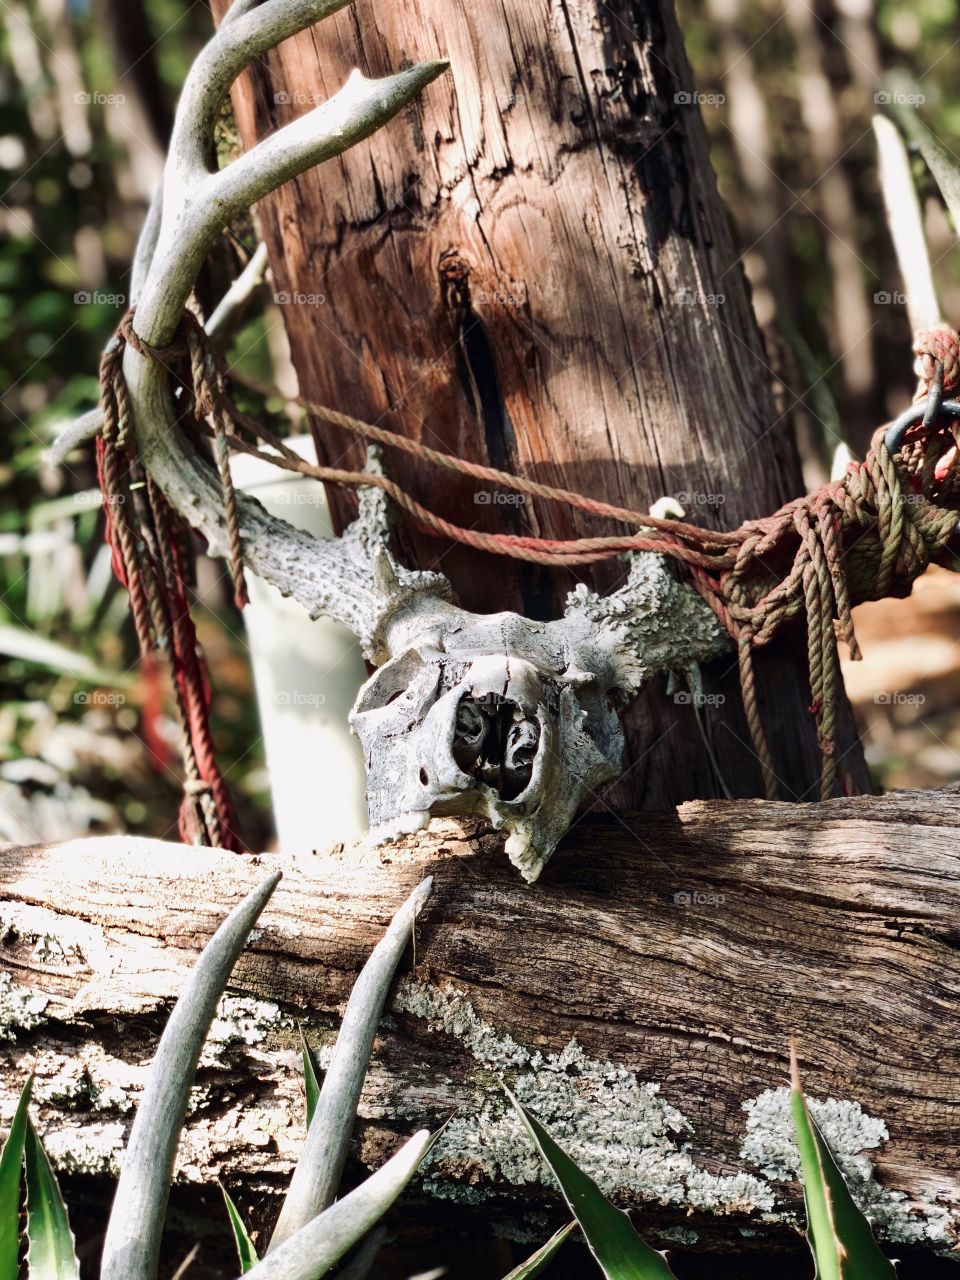 Whitetail deer skull & antlers